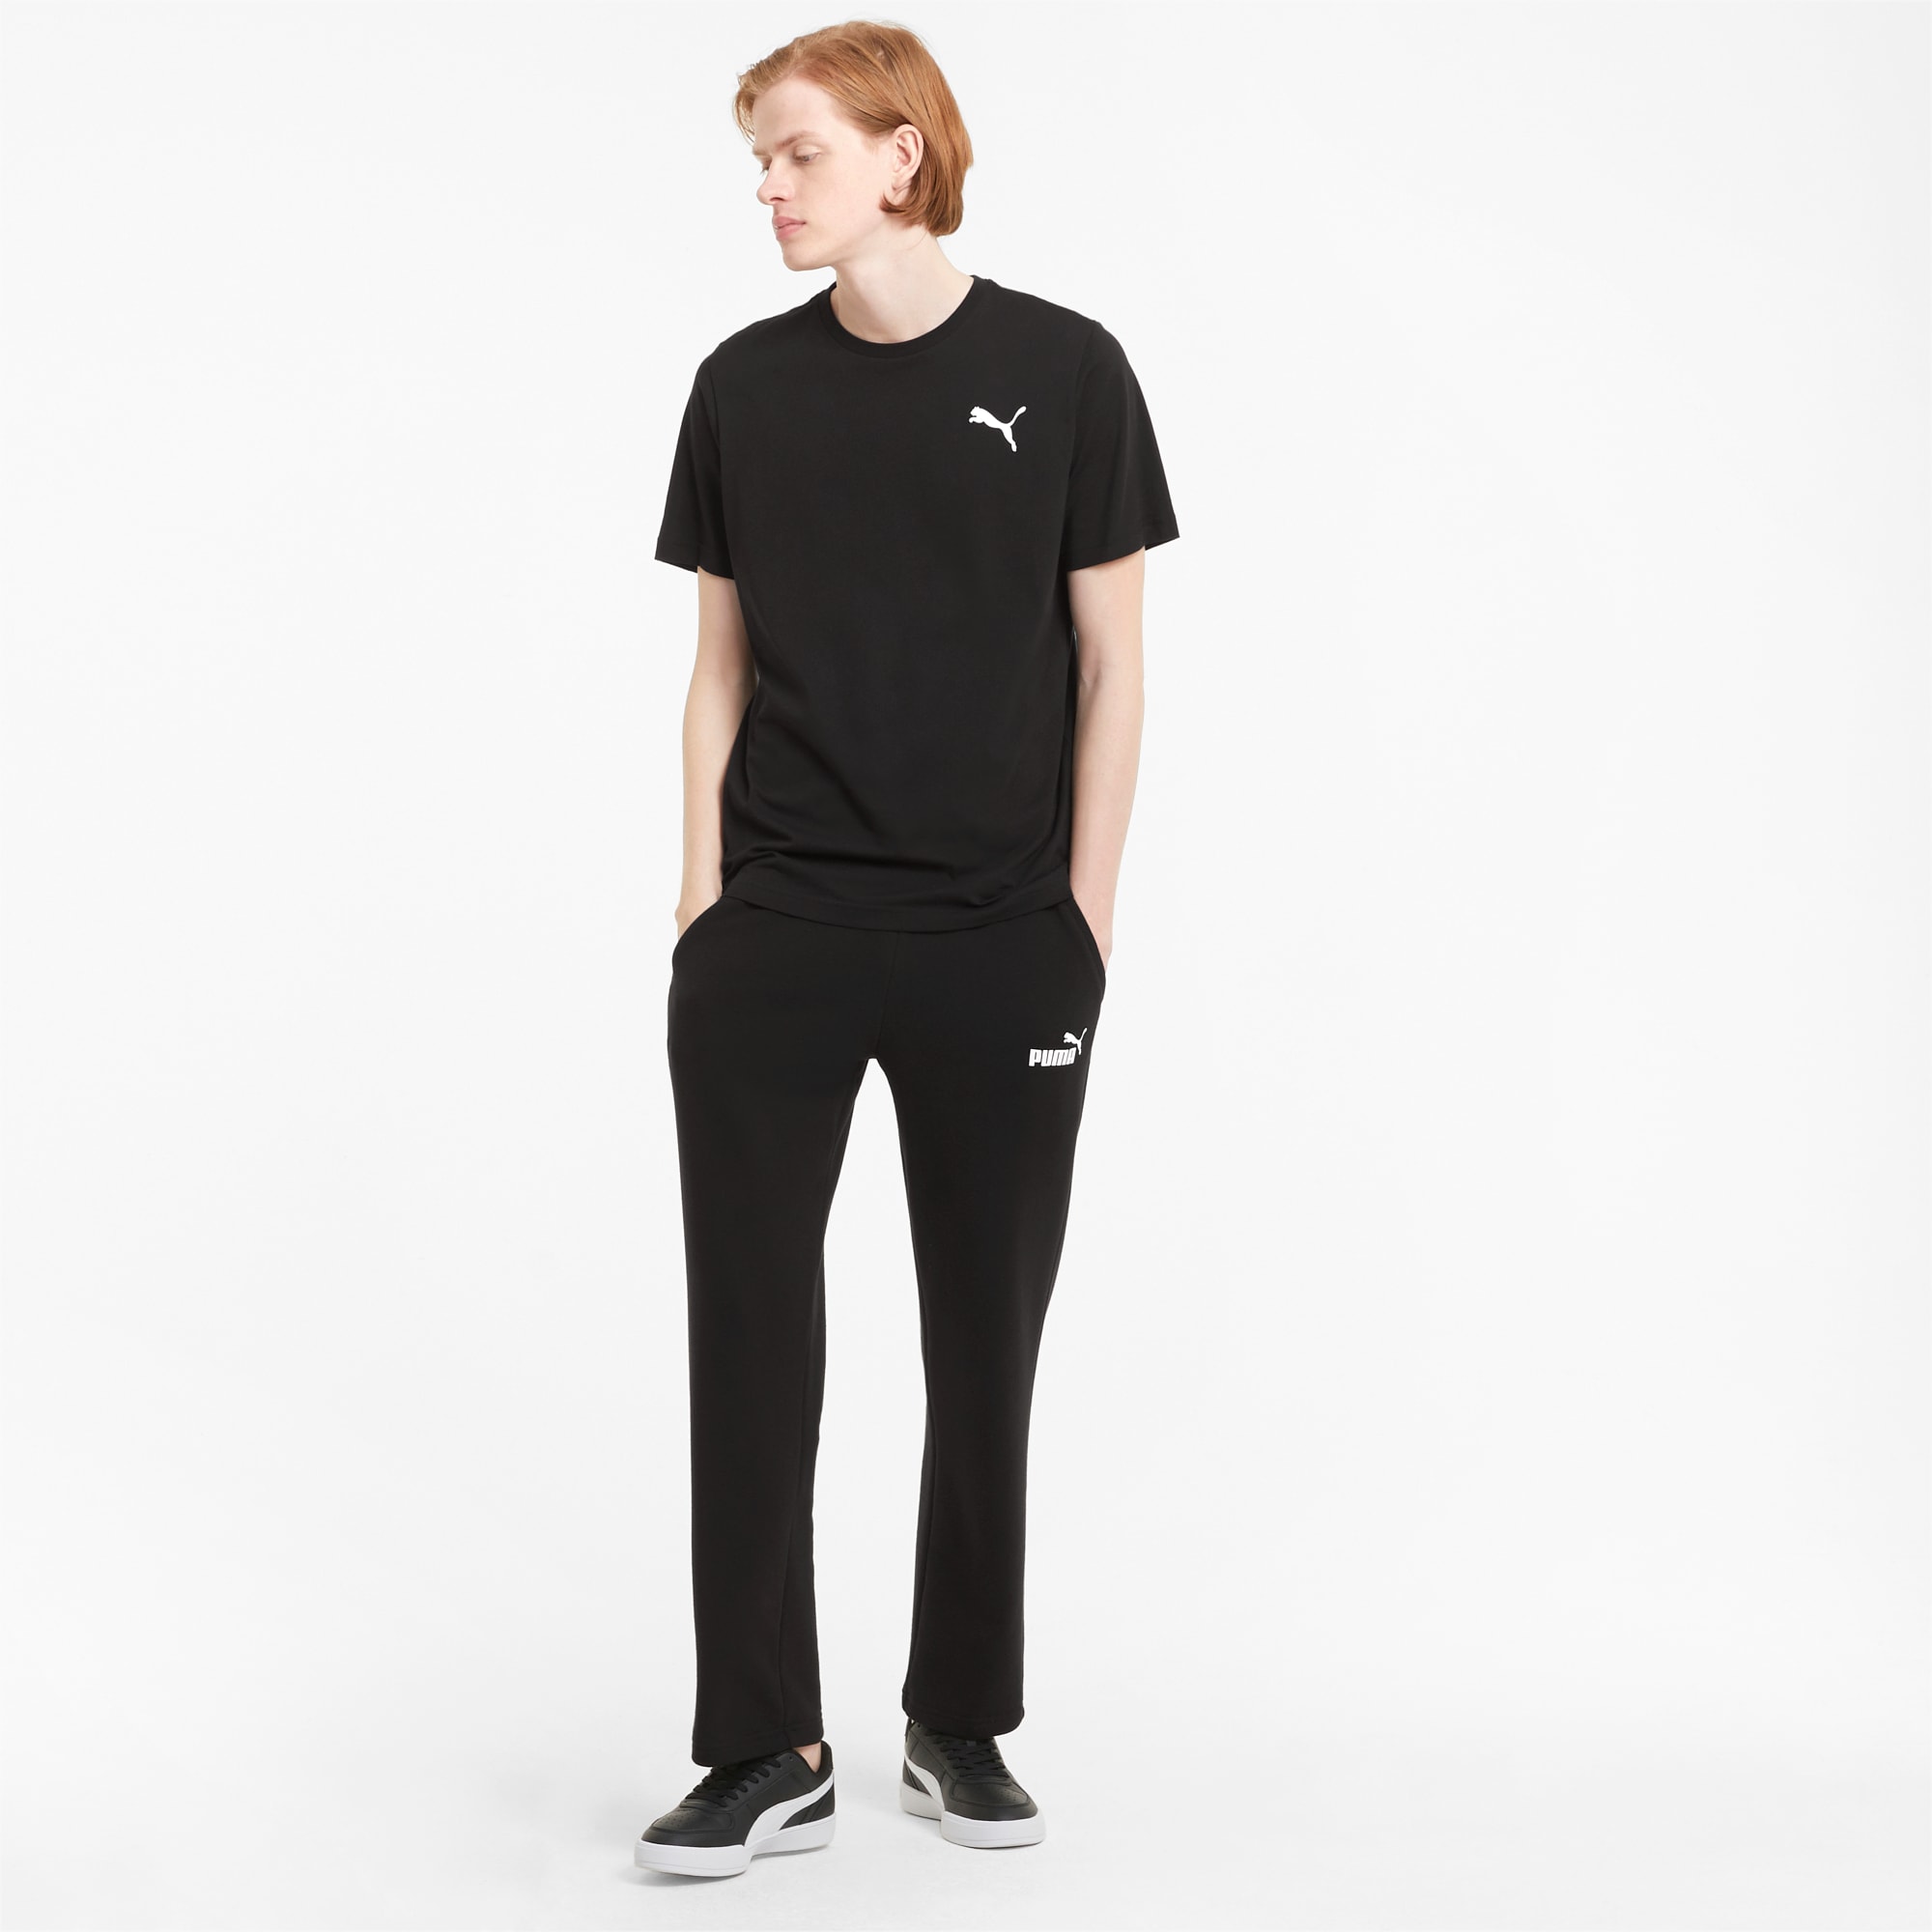 PUMA Essentials Logo Men's Sweatpants, Black, Size XXL, Clothing